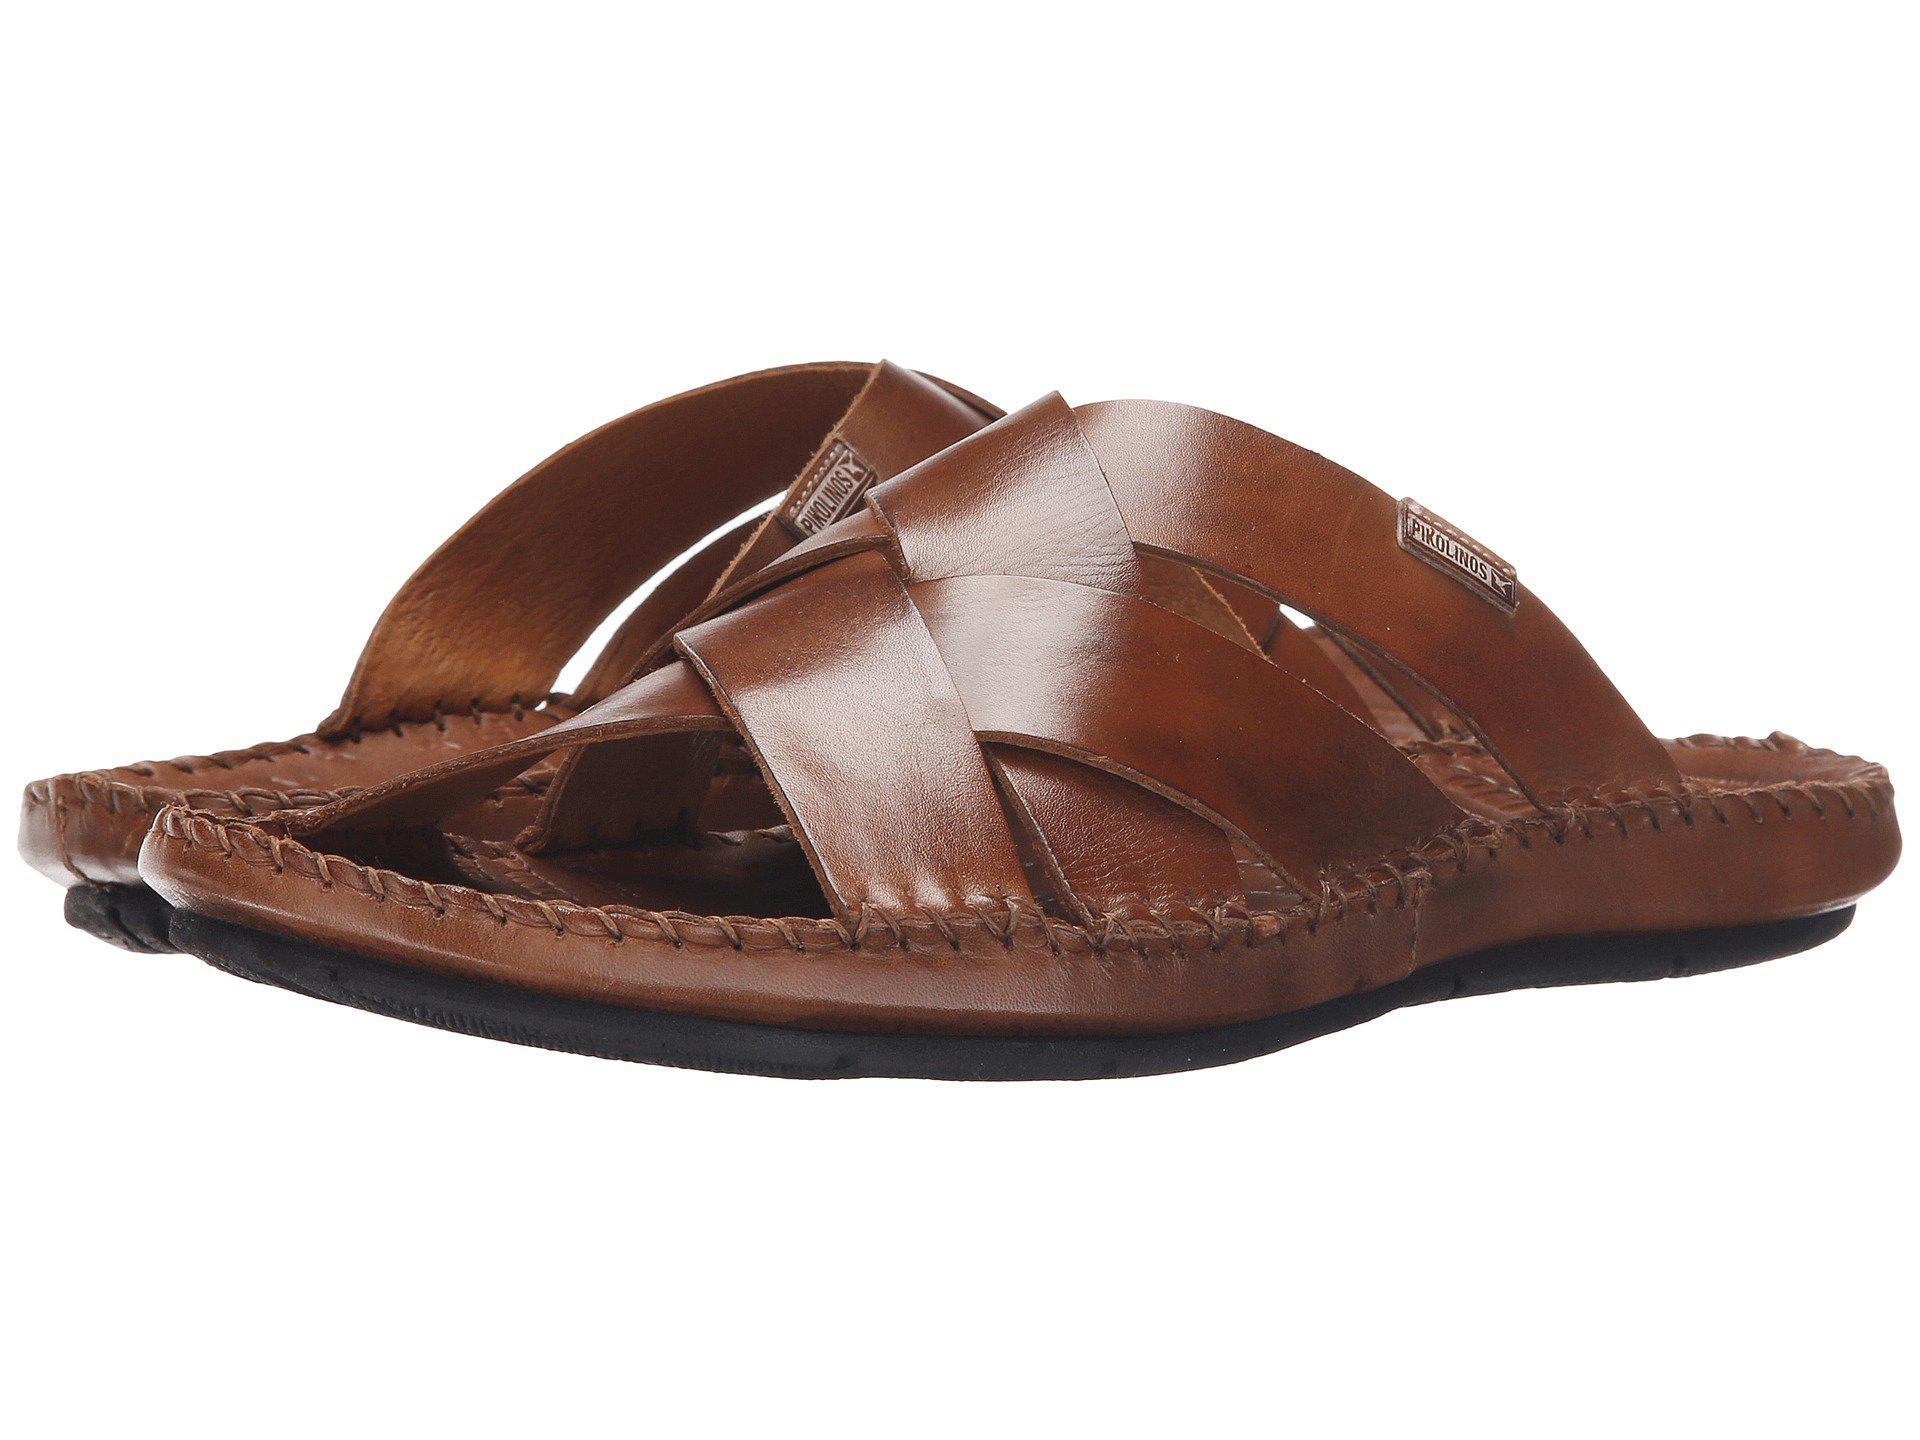 Lyst - Pikolinos Tarifa 06j-0015 (black) Men's Sandals in Brown for Men